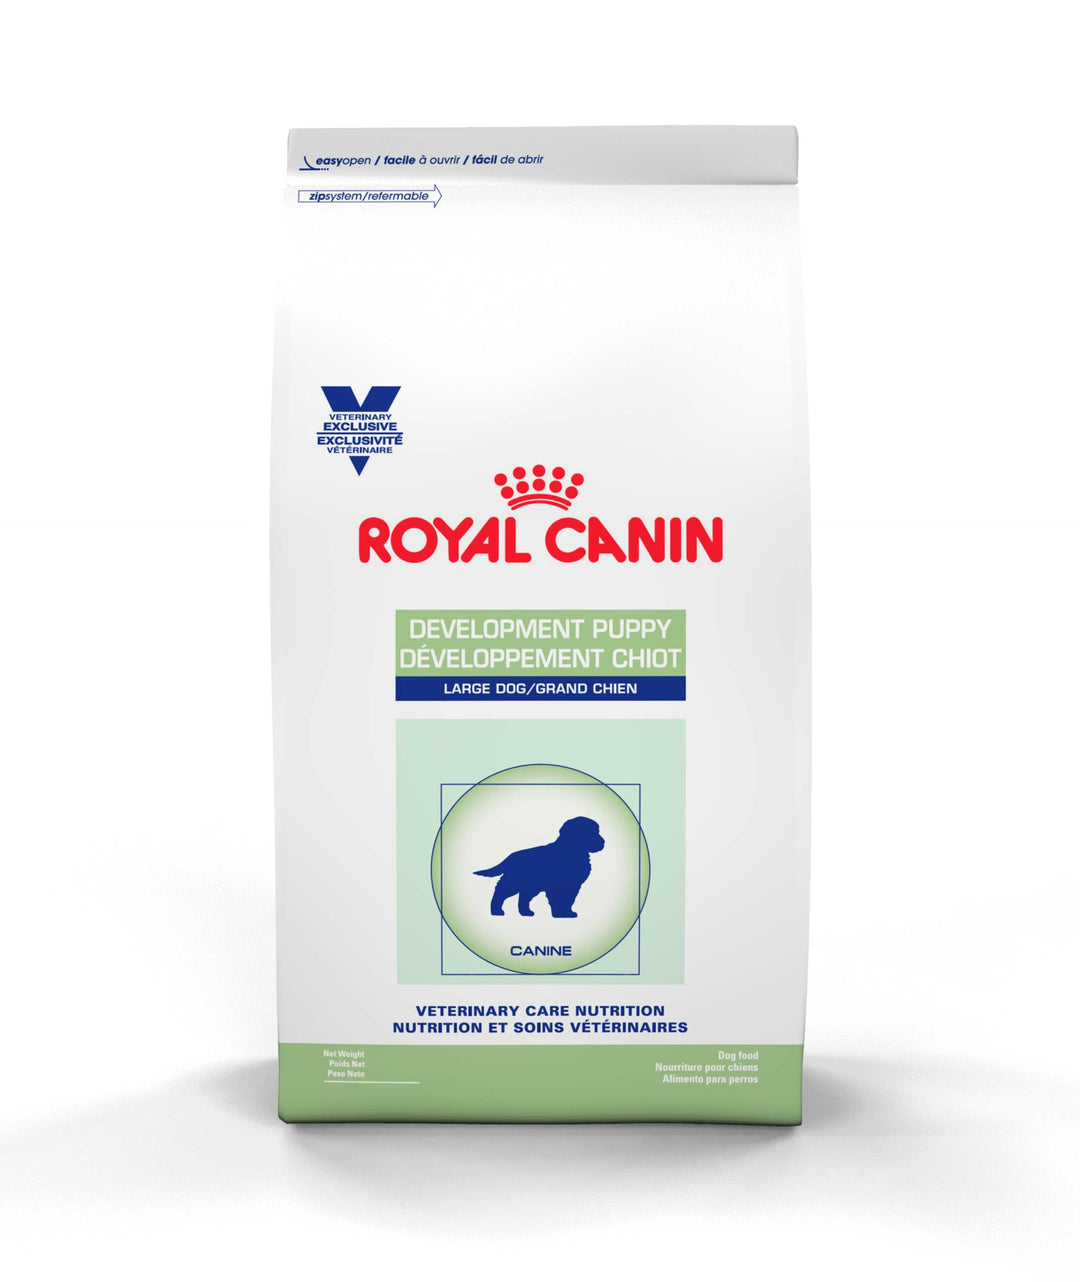 Royal Canin Alimento Seco Development Puppy Large Dog para Cachorro Raza Grande, 4 kg y 13.03 kg